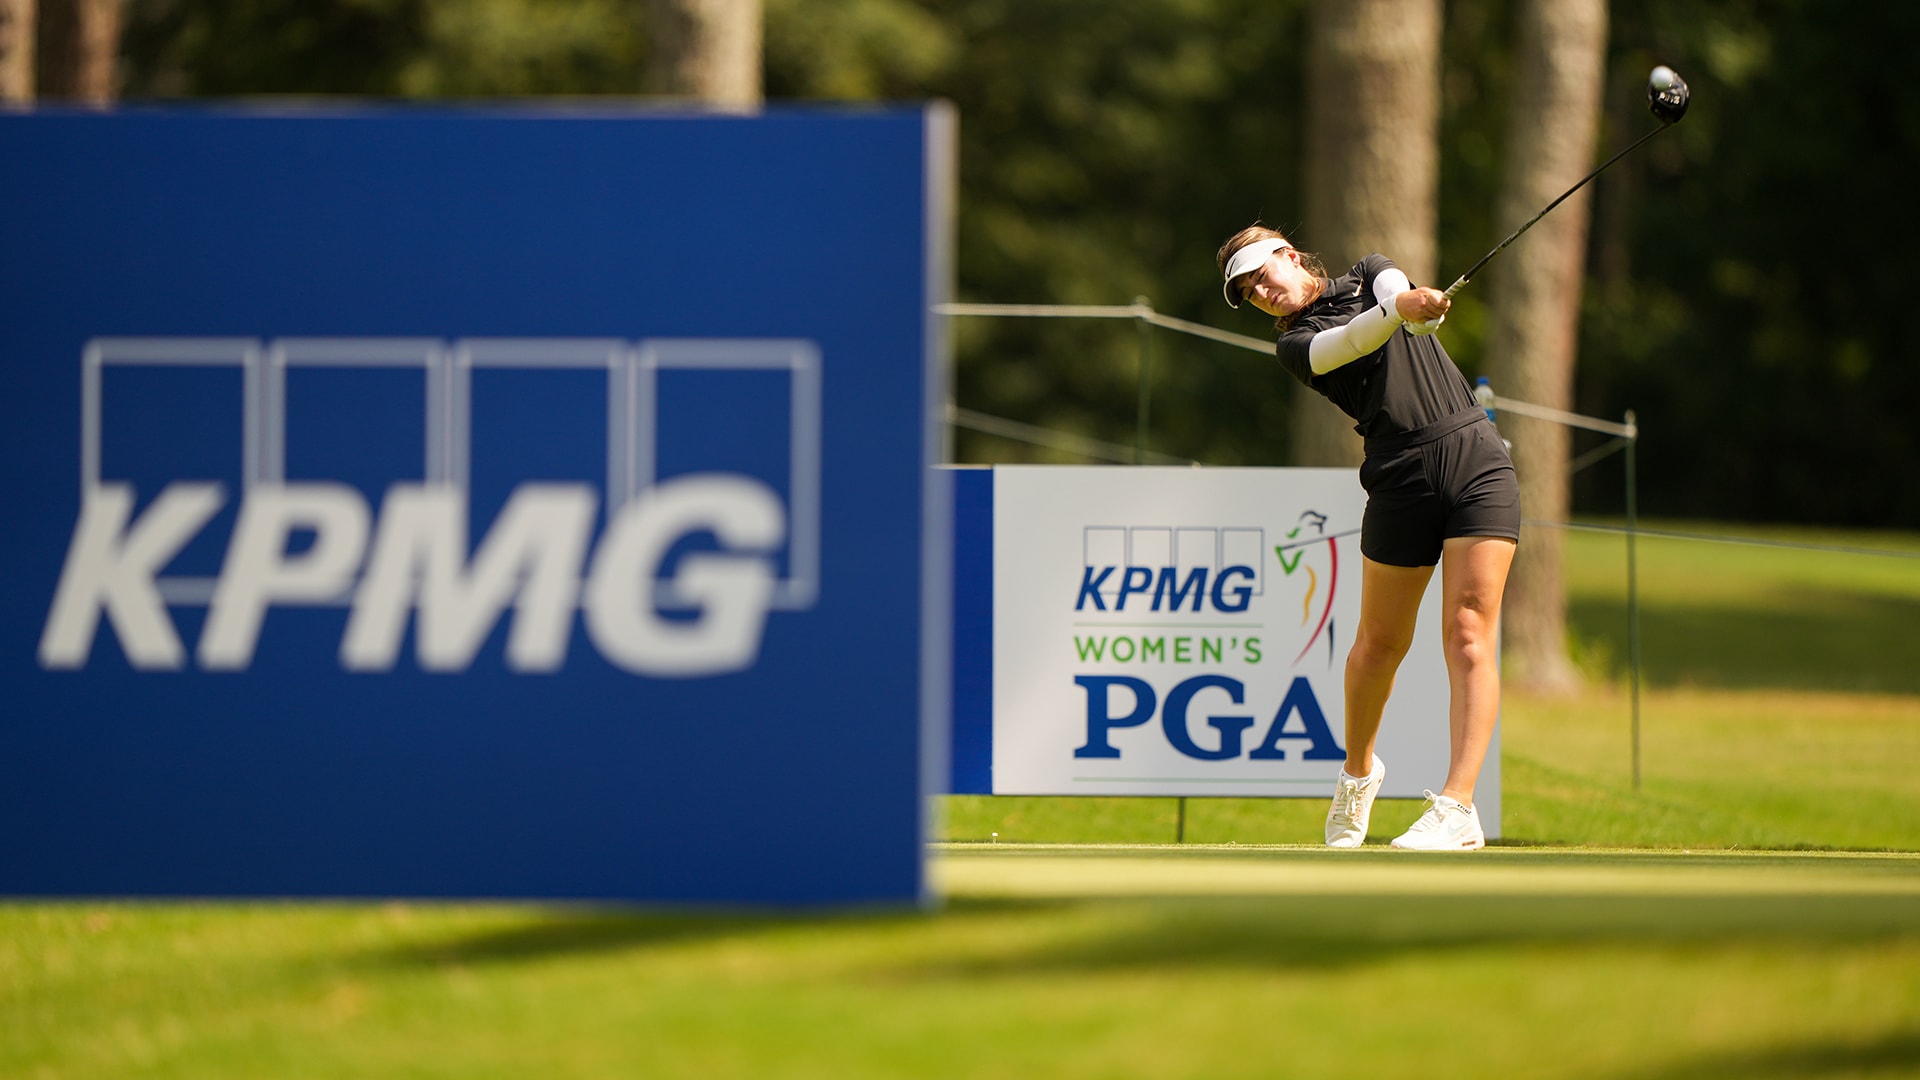 Garbiella Ruffels looks to continue Epson Tour success on a major scale at KPMG Women’s PGA